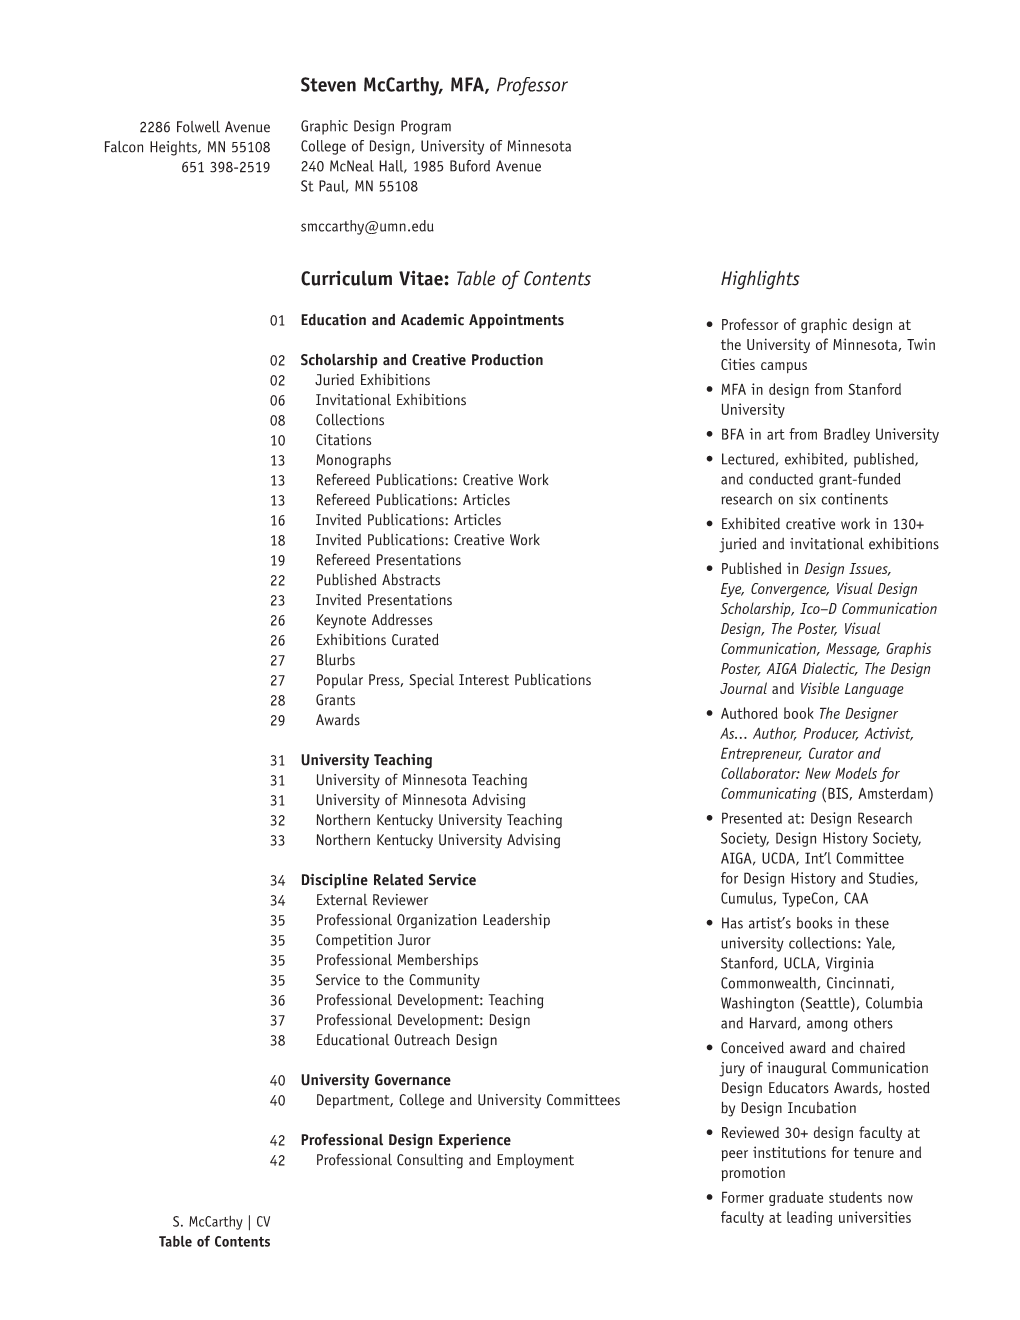 Curriculum Vitae: Table of Contents Steven Mccarthy, MFA, Professor Highlights